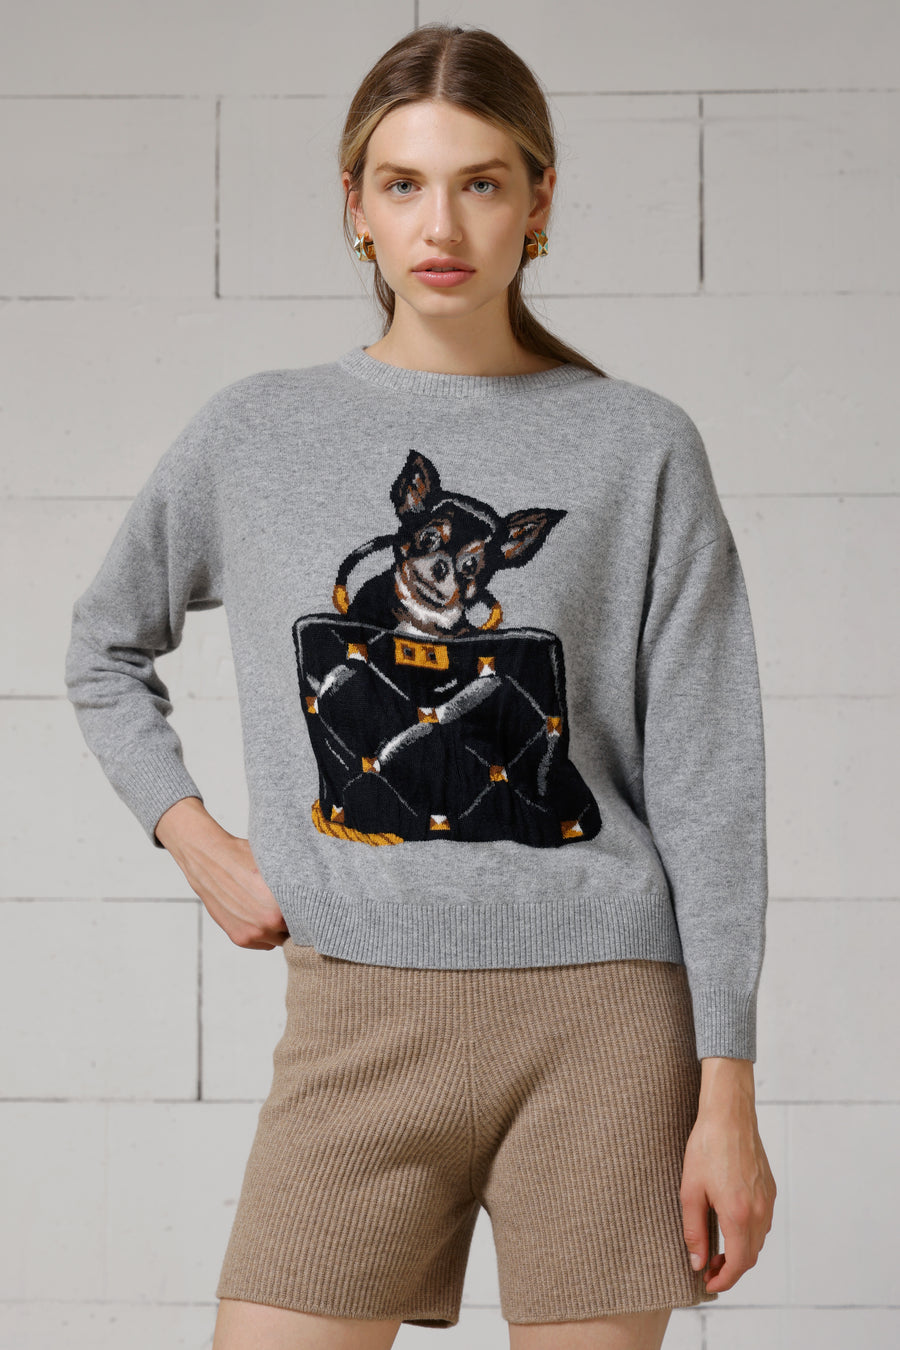 Tiny Women's Intarsia Lambswool Sweater